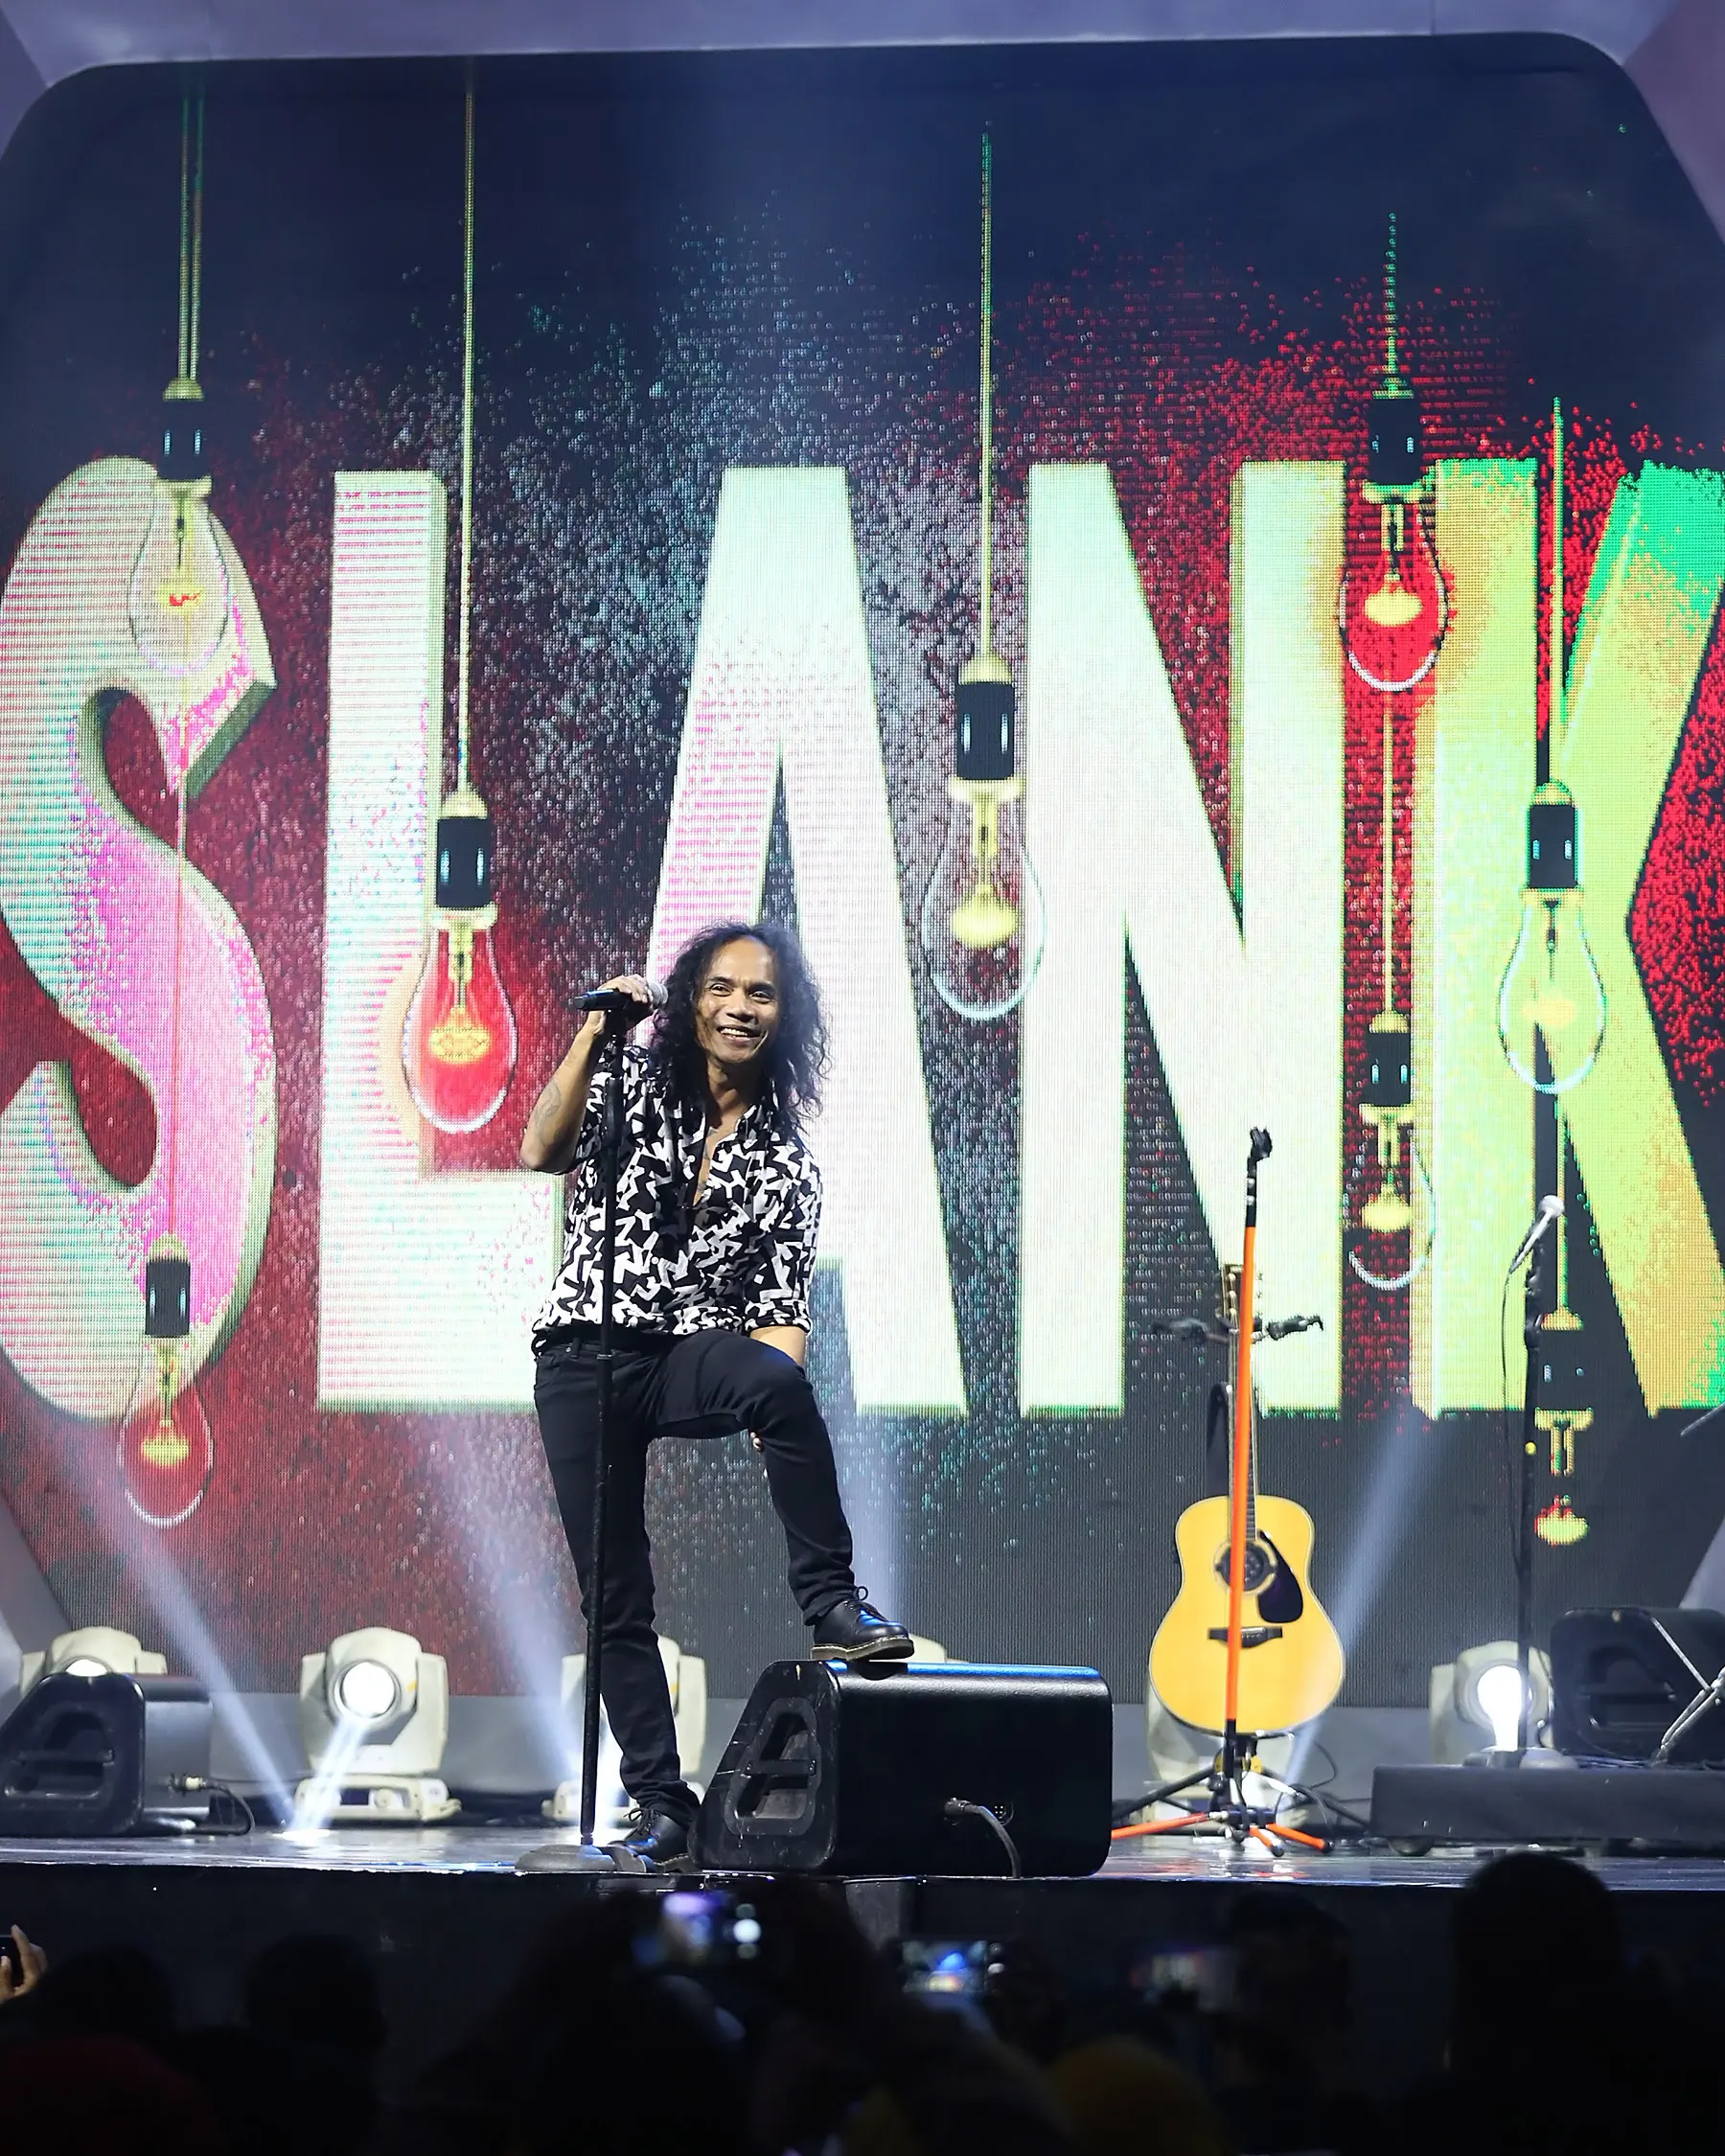 Bersama Jenita Janet, Slank yang melantunkan ‘Orkes Terakhir’ menutup penampilannya malam itu dengan sangat mengesankan.  (Bambang E. Ros/Bintang.com)